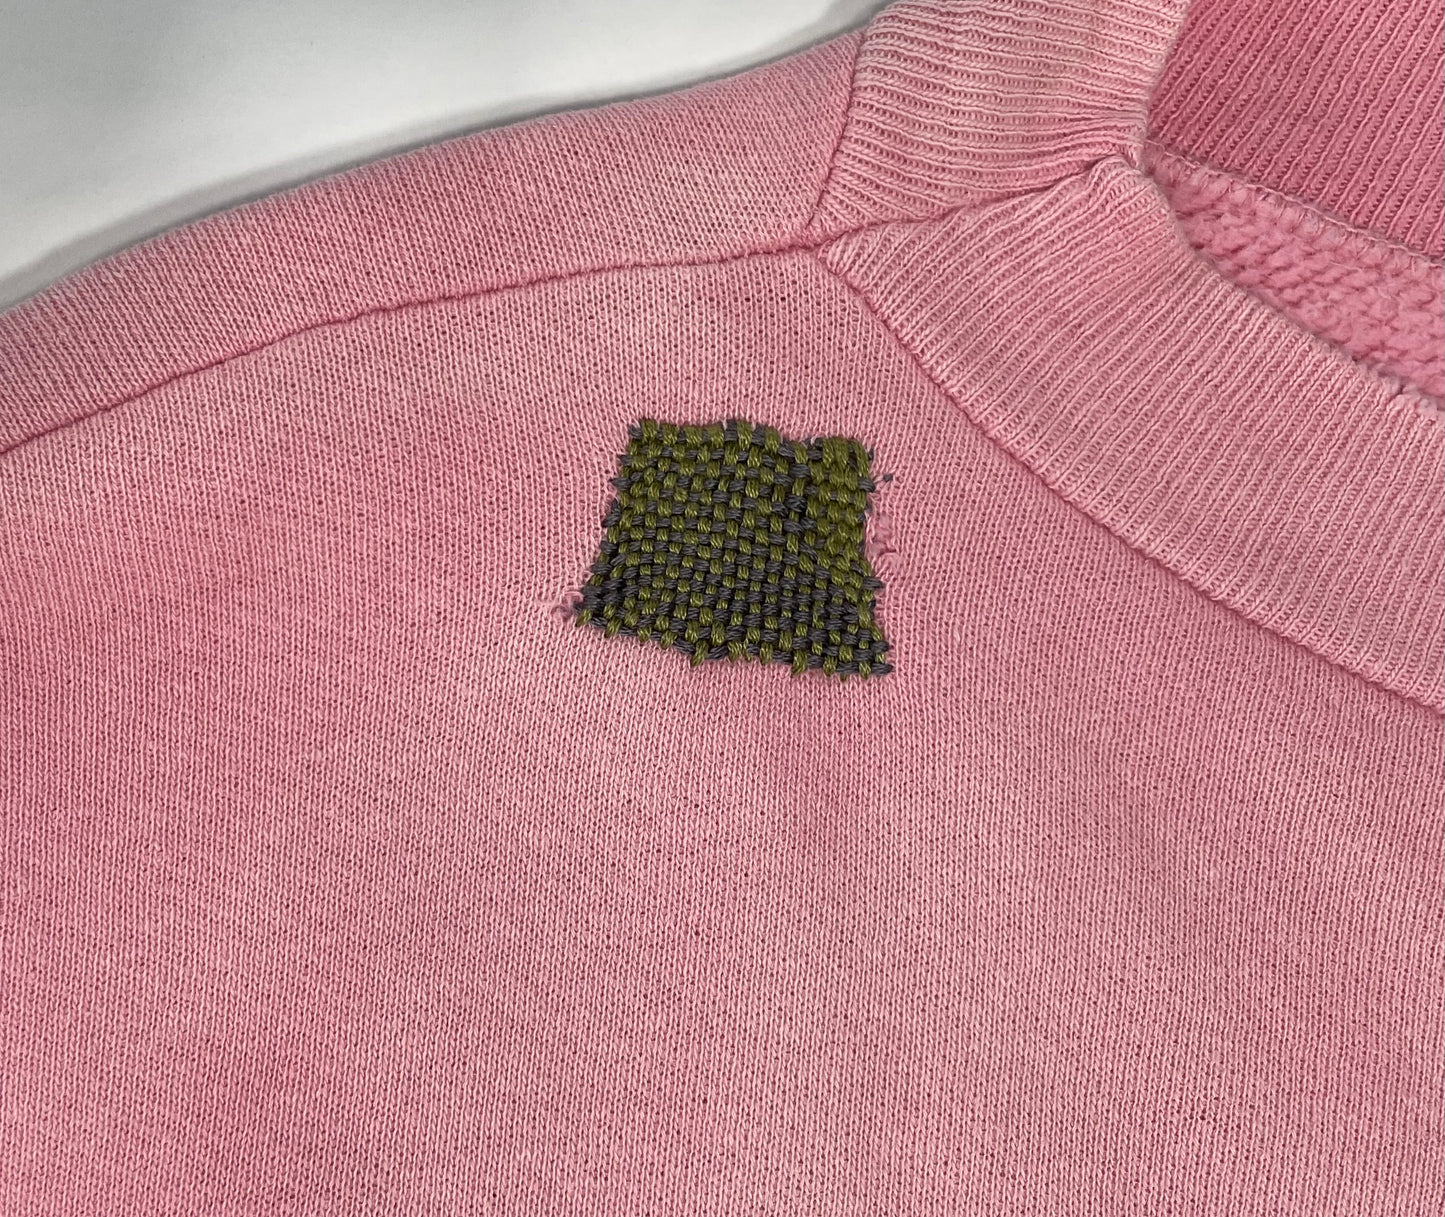 1950's Rare Pink 100% Cotton Sweatshirt